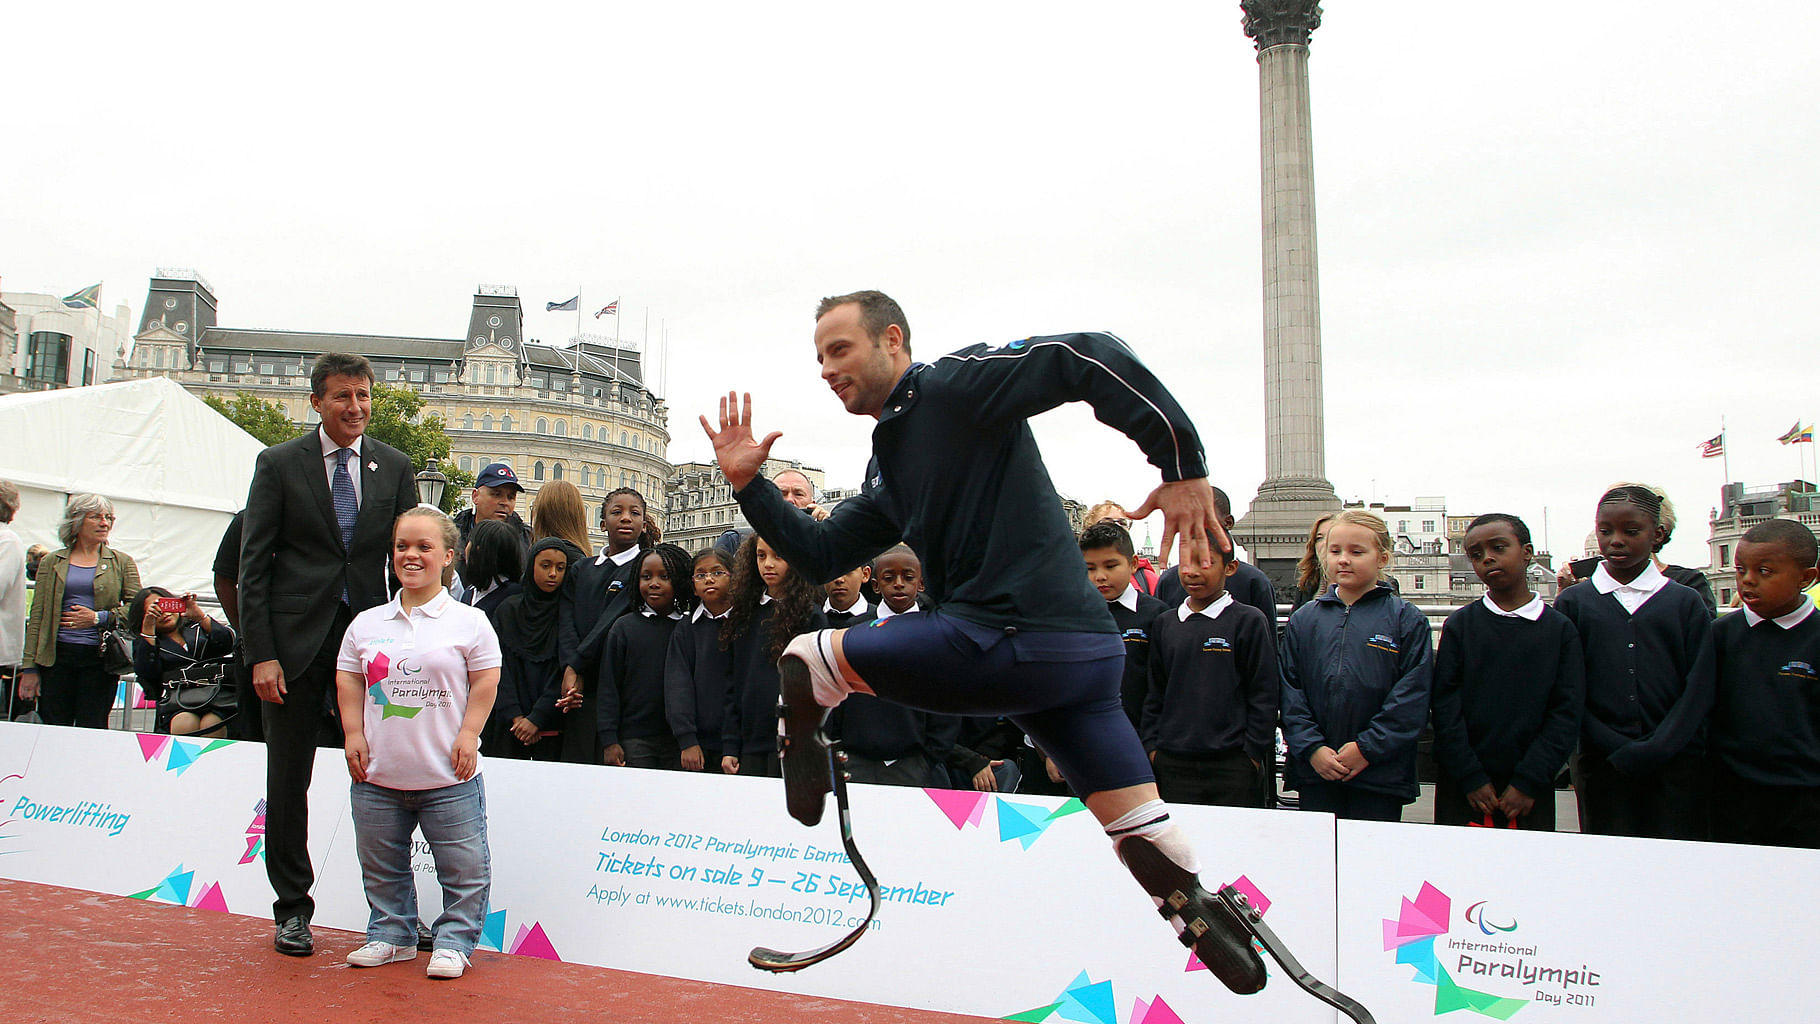 Oscar Pistorius shows off his skills. (Photo: iStockphoto) 